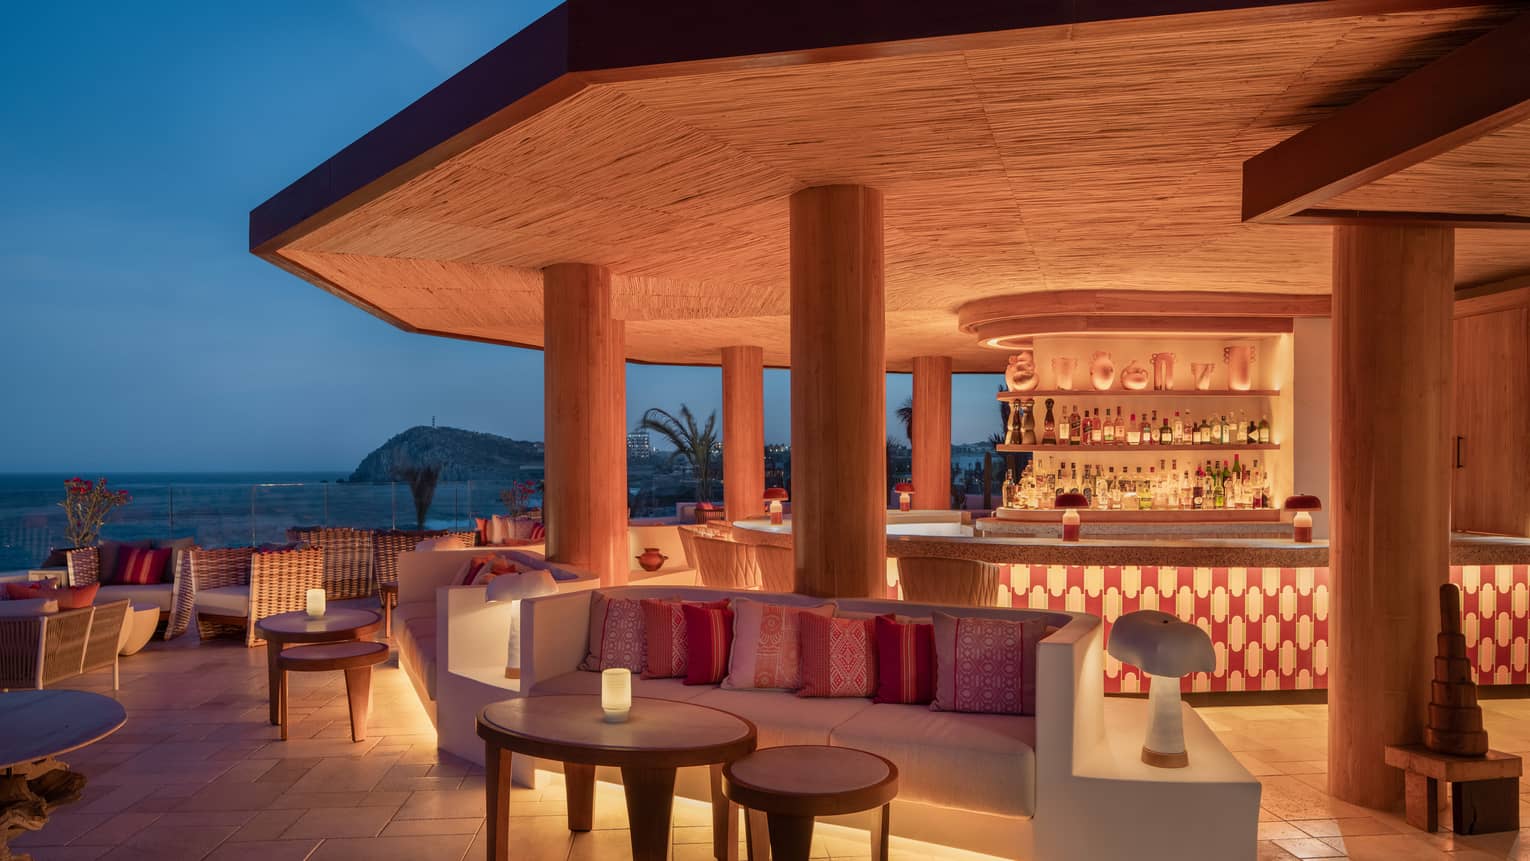 Illuminated ocean-view bar at night at Four Seasons Resort and Residences Cabo San Lucas